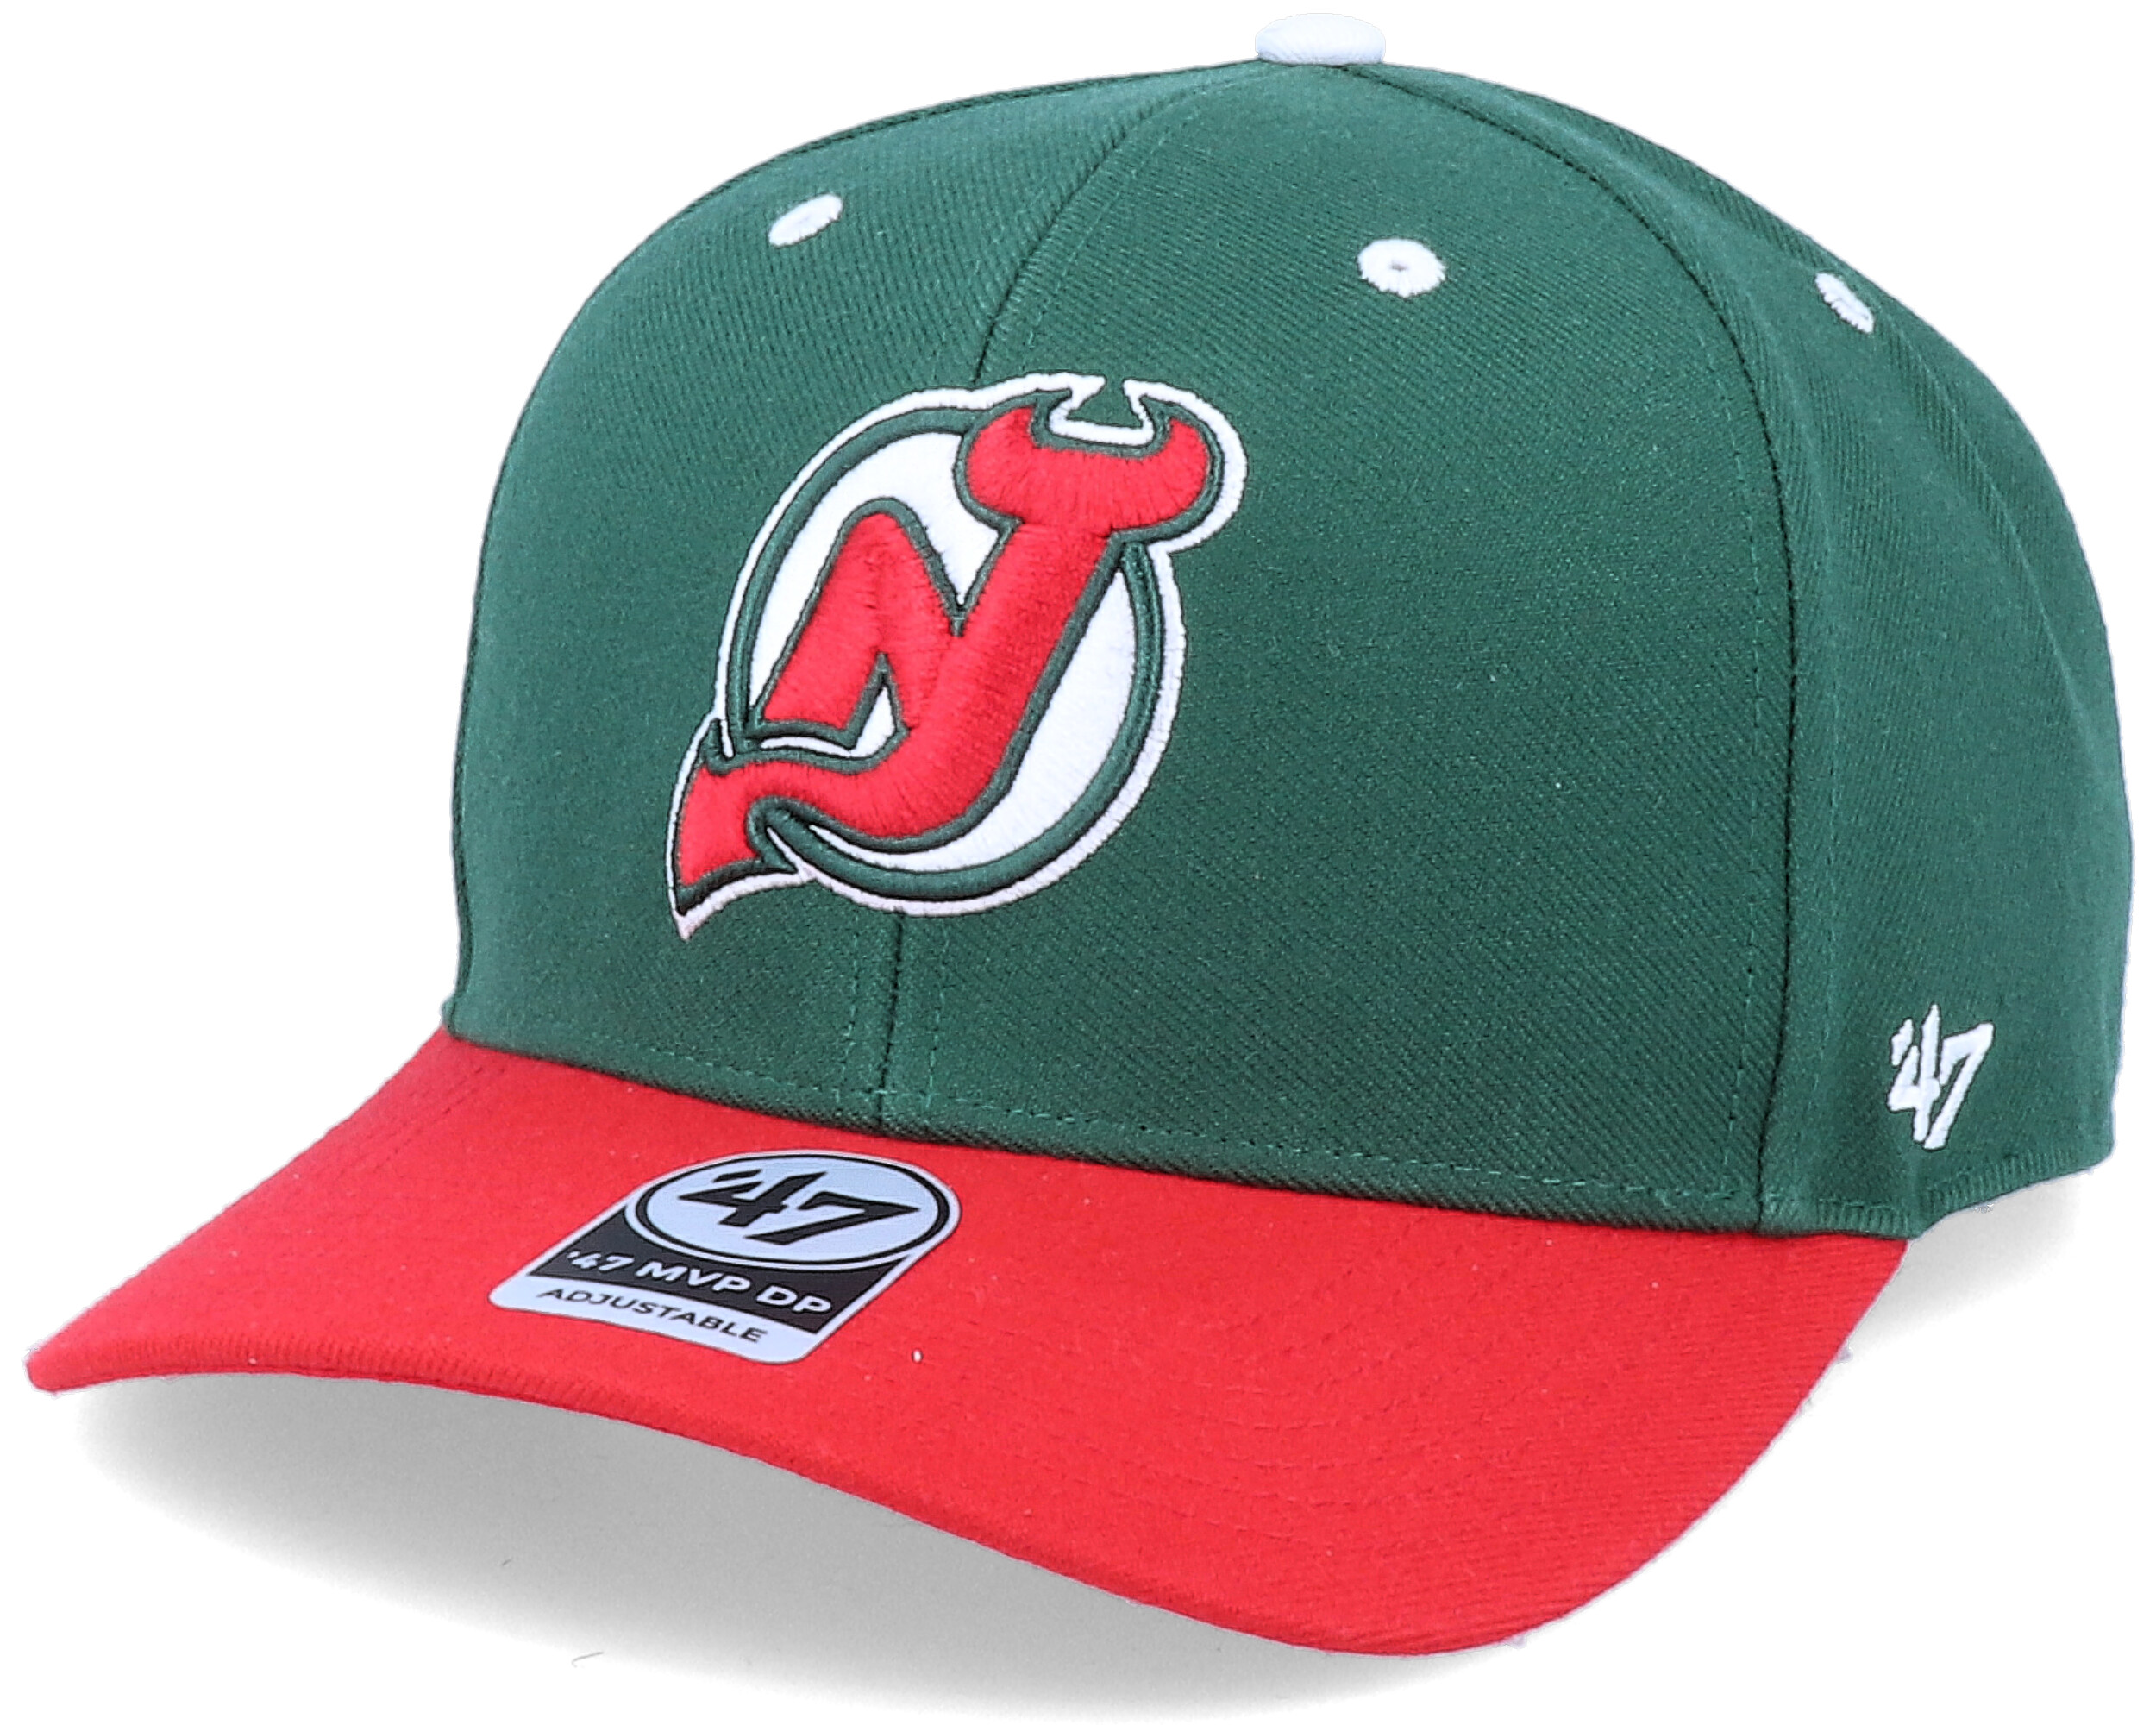 New Jersey Devils '47 Blockshead Snapback Hat - Red/Black